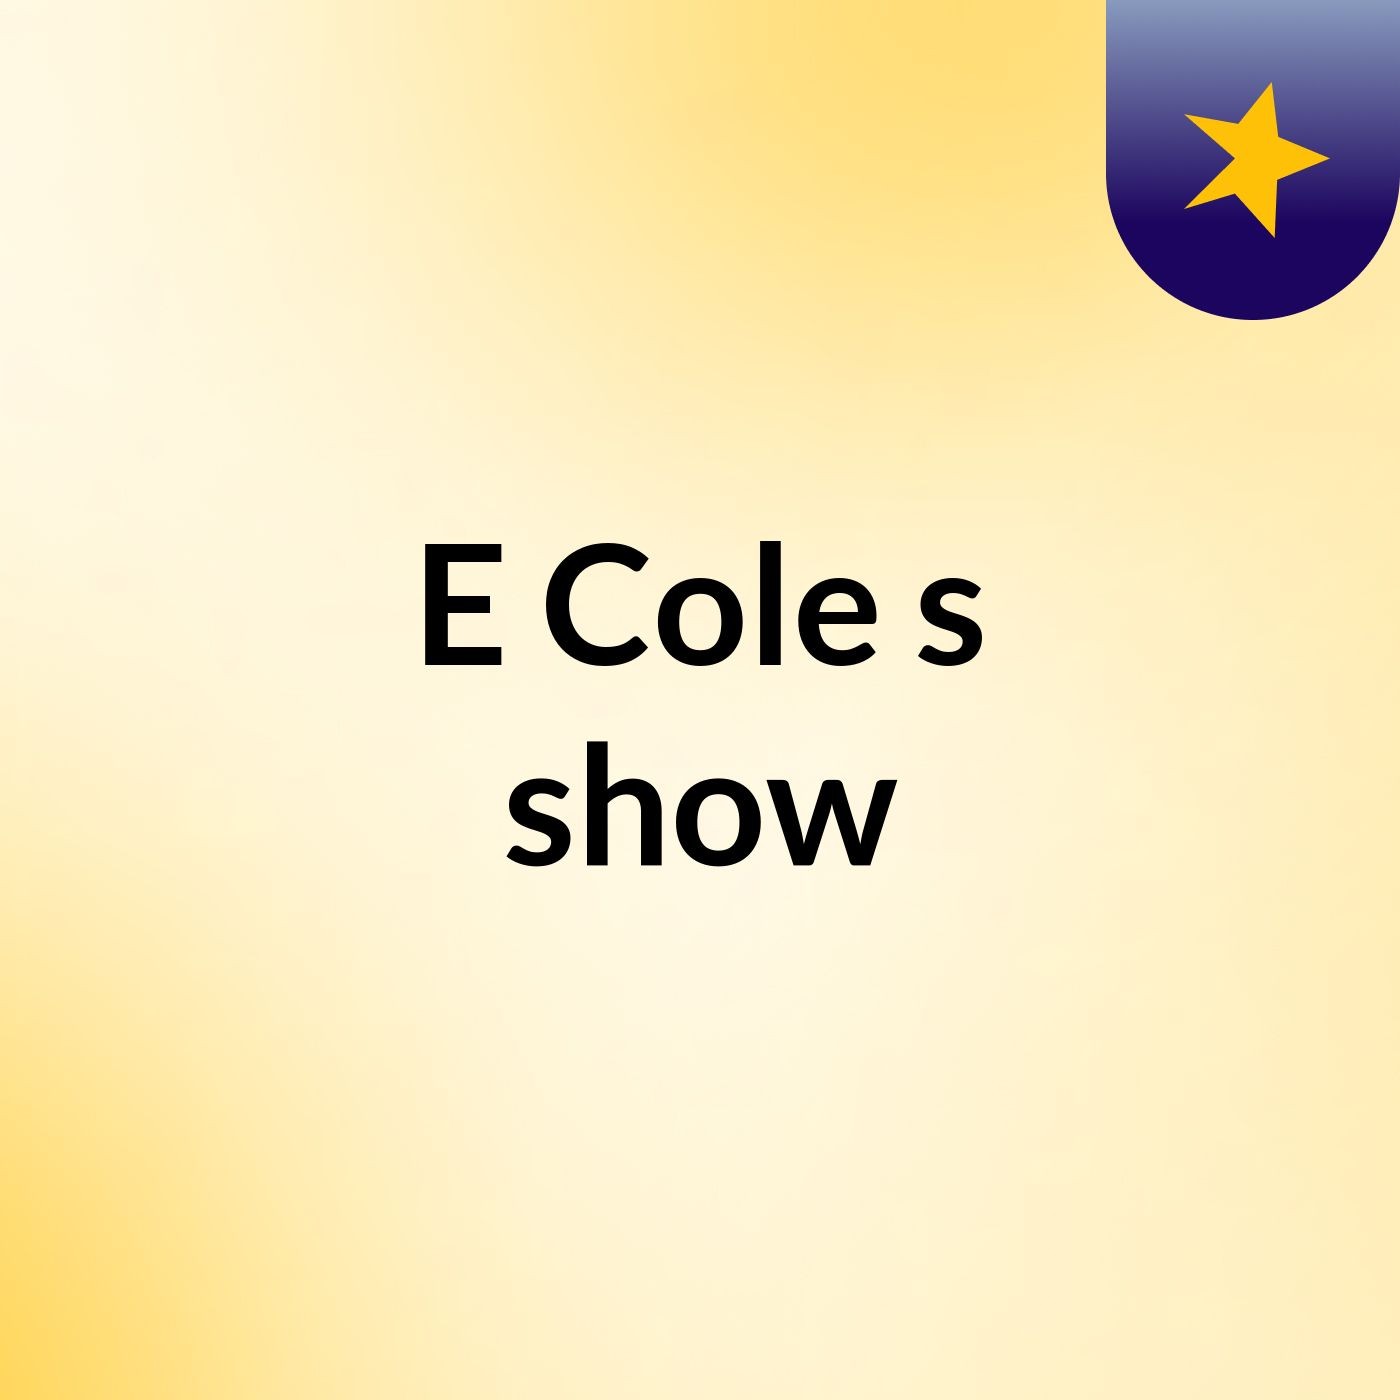 E Cole's show